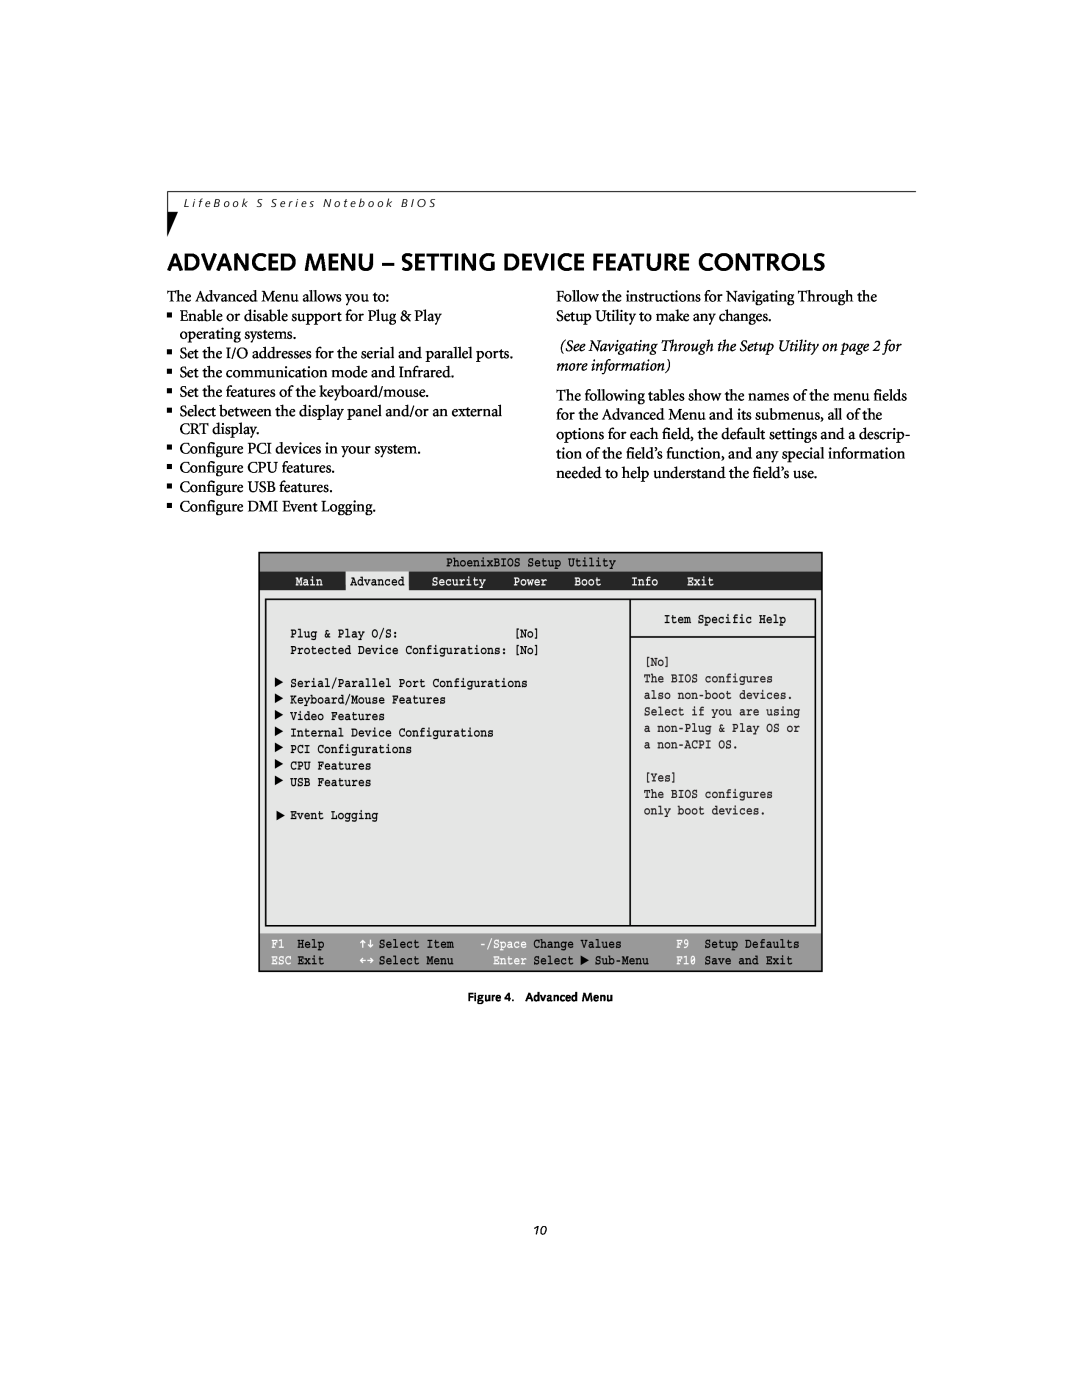 Fujitsu Siemens Computers S6010 manual Advanced Menu - Setting Device Feature Controls 